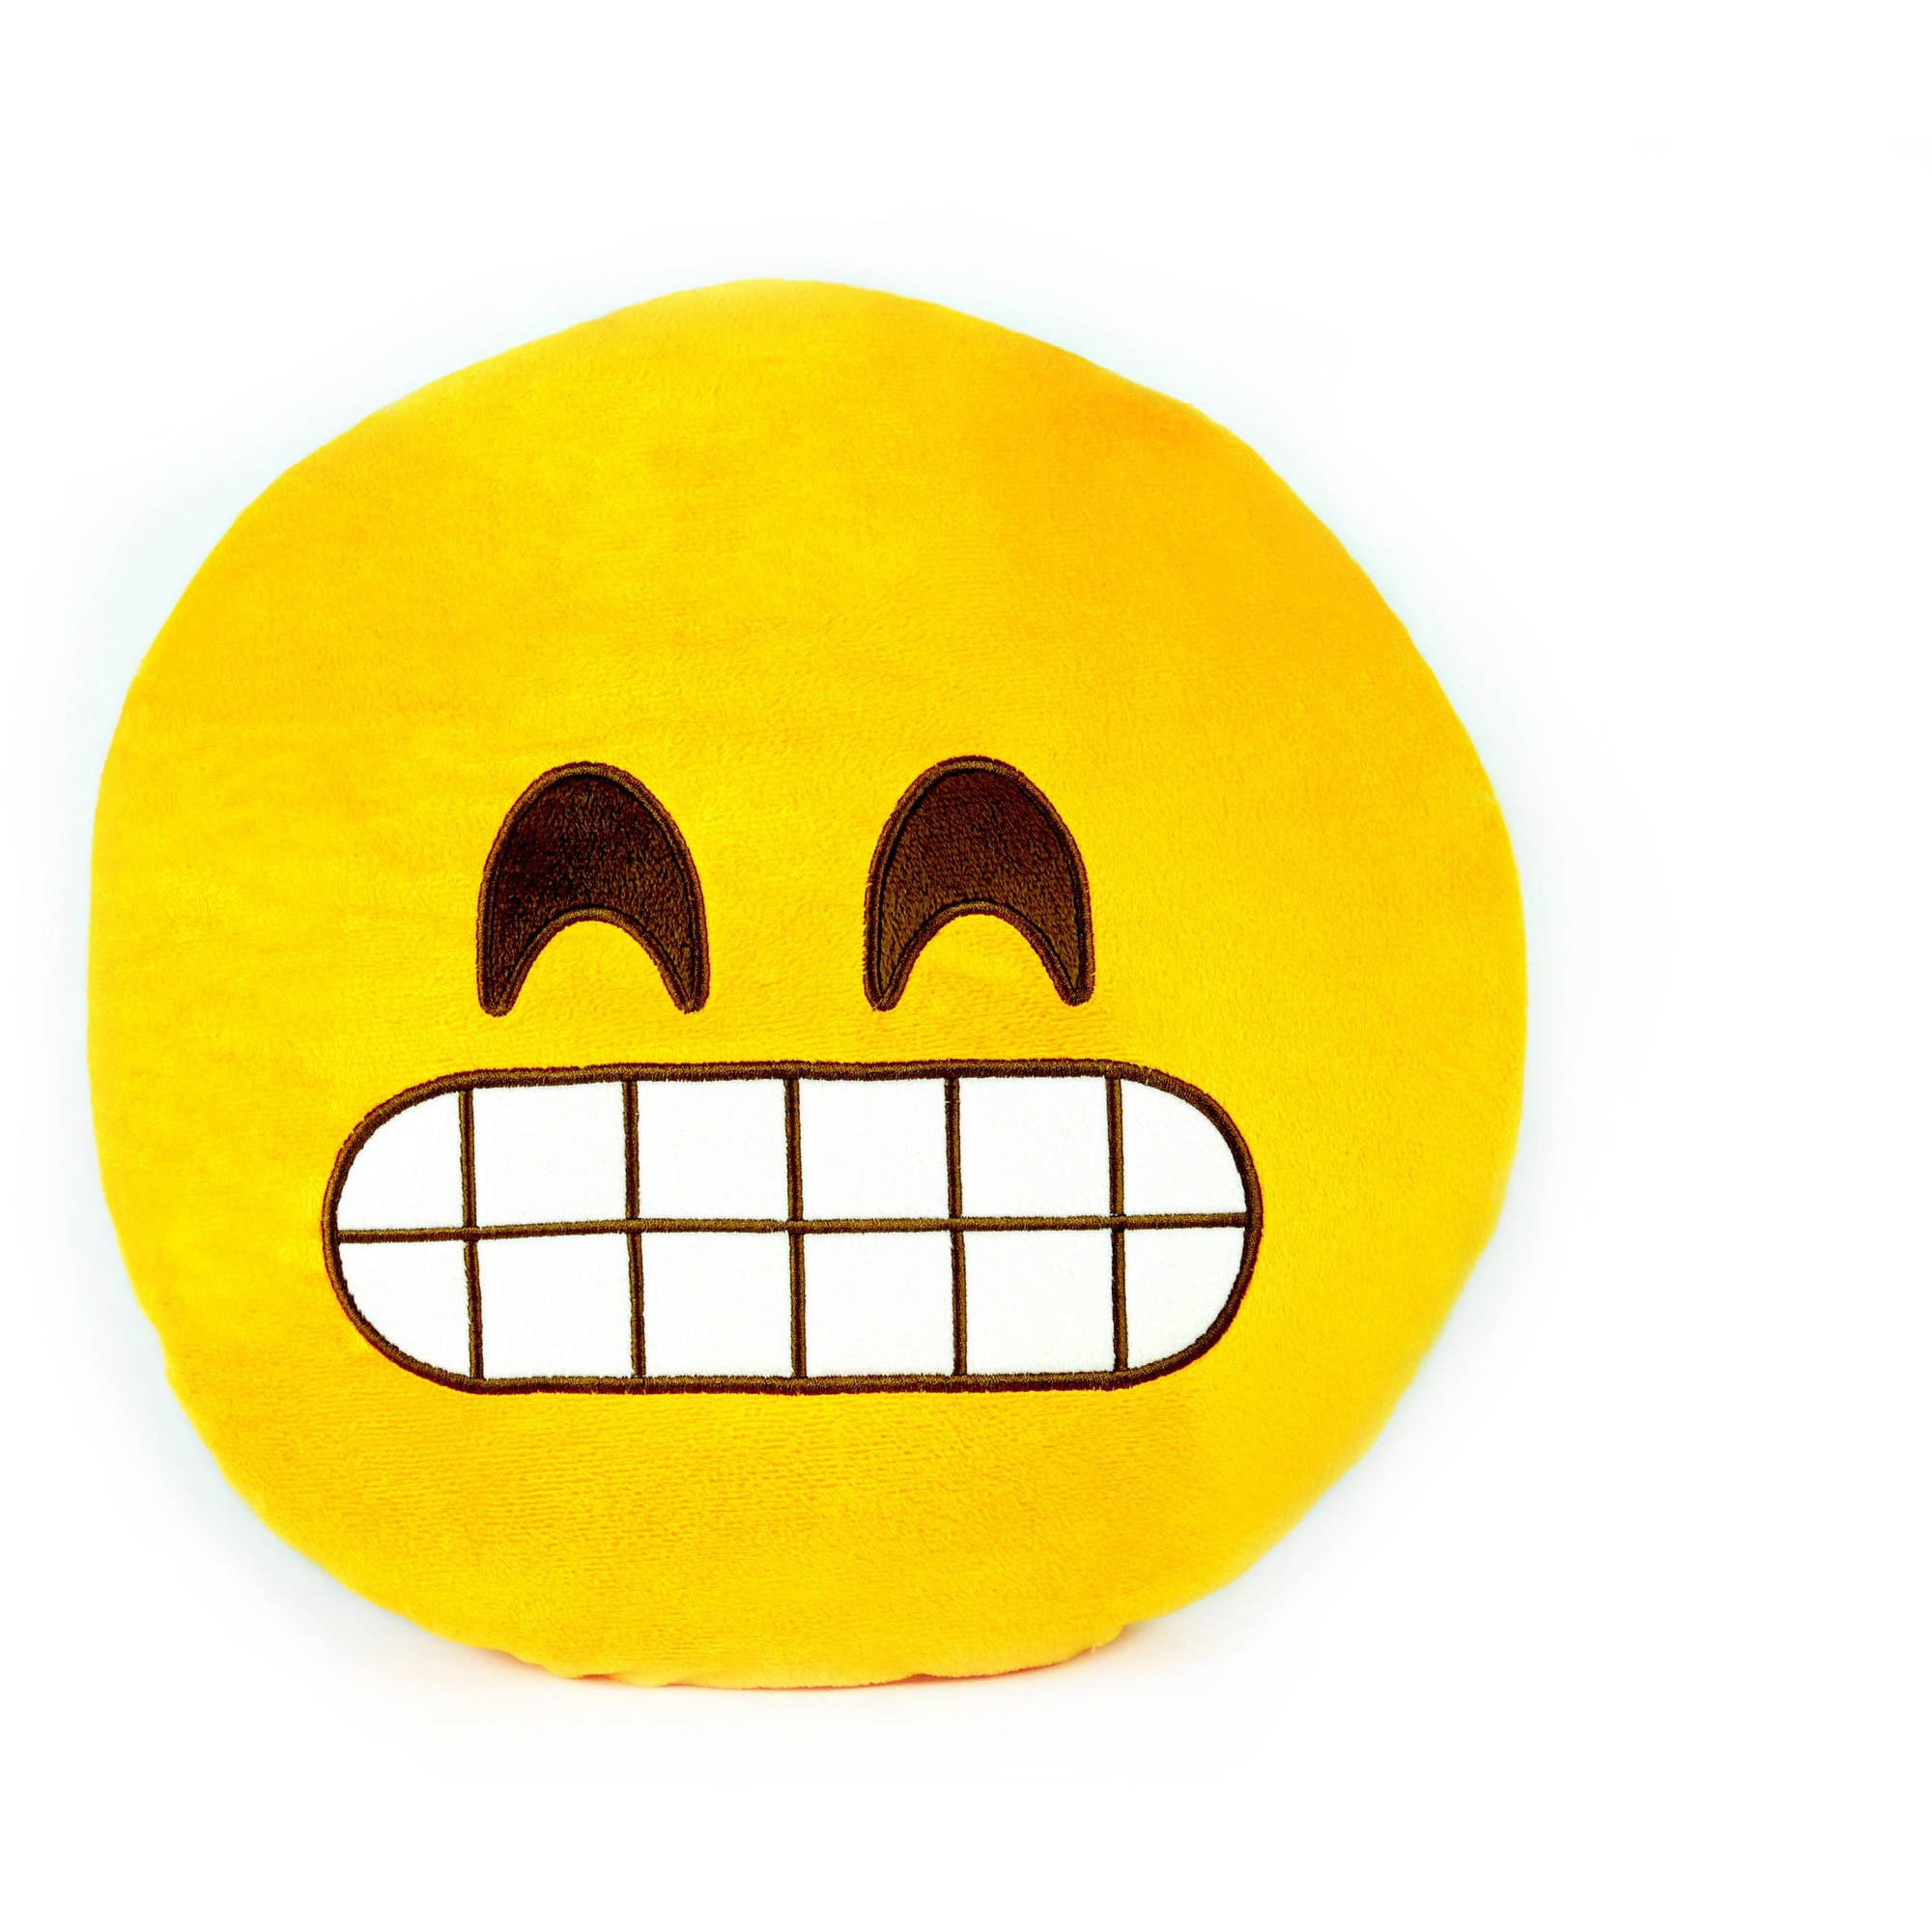 Throwboy The Original Emoji Pillows - Grin 